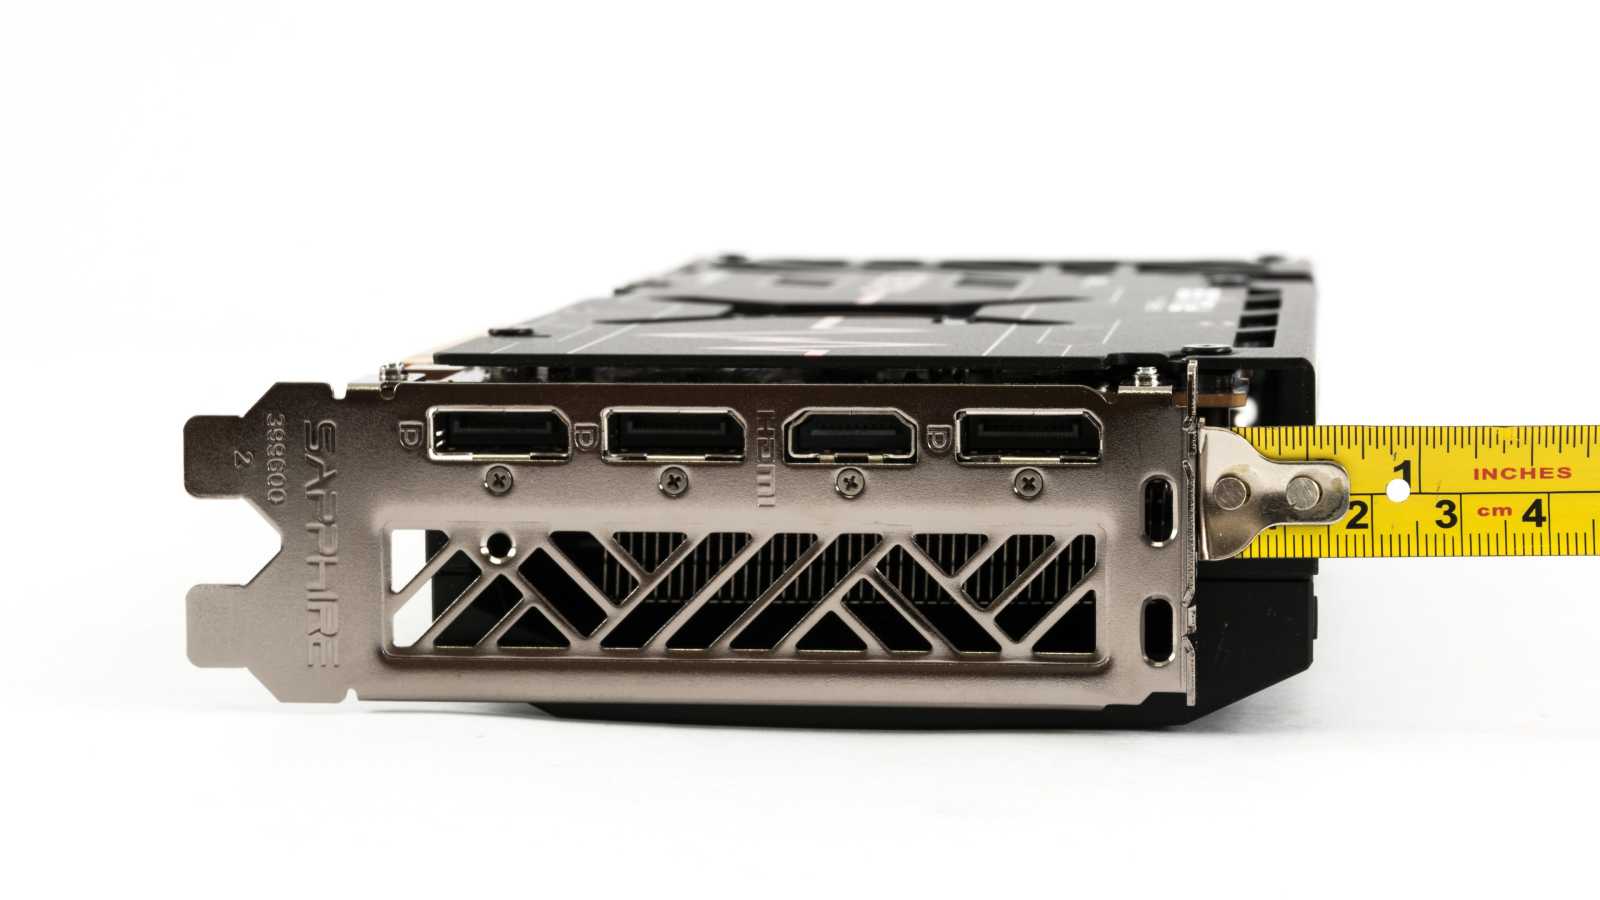 Pulse AMD Radeon RX 7600 8GB v testu: levný a dobrý základ od Sapphire